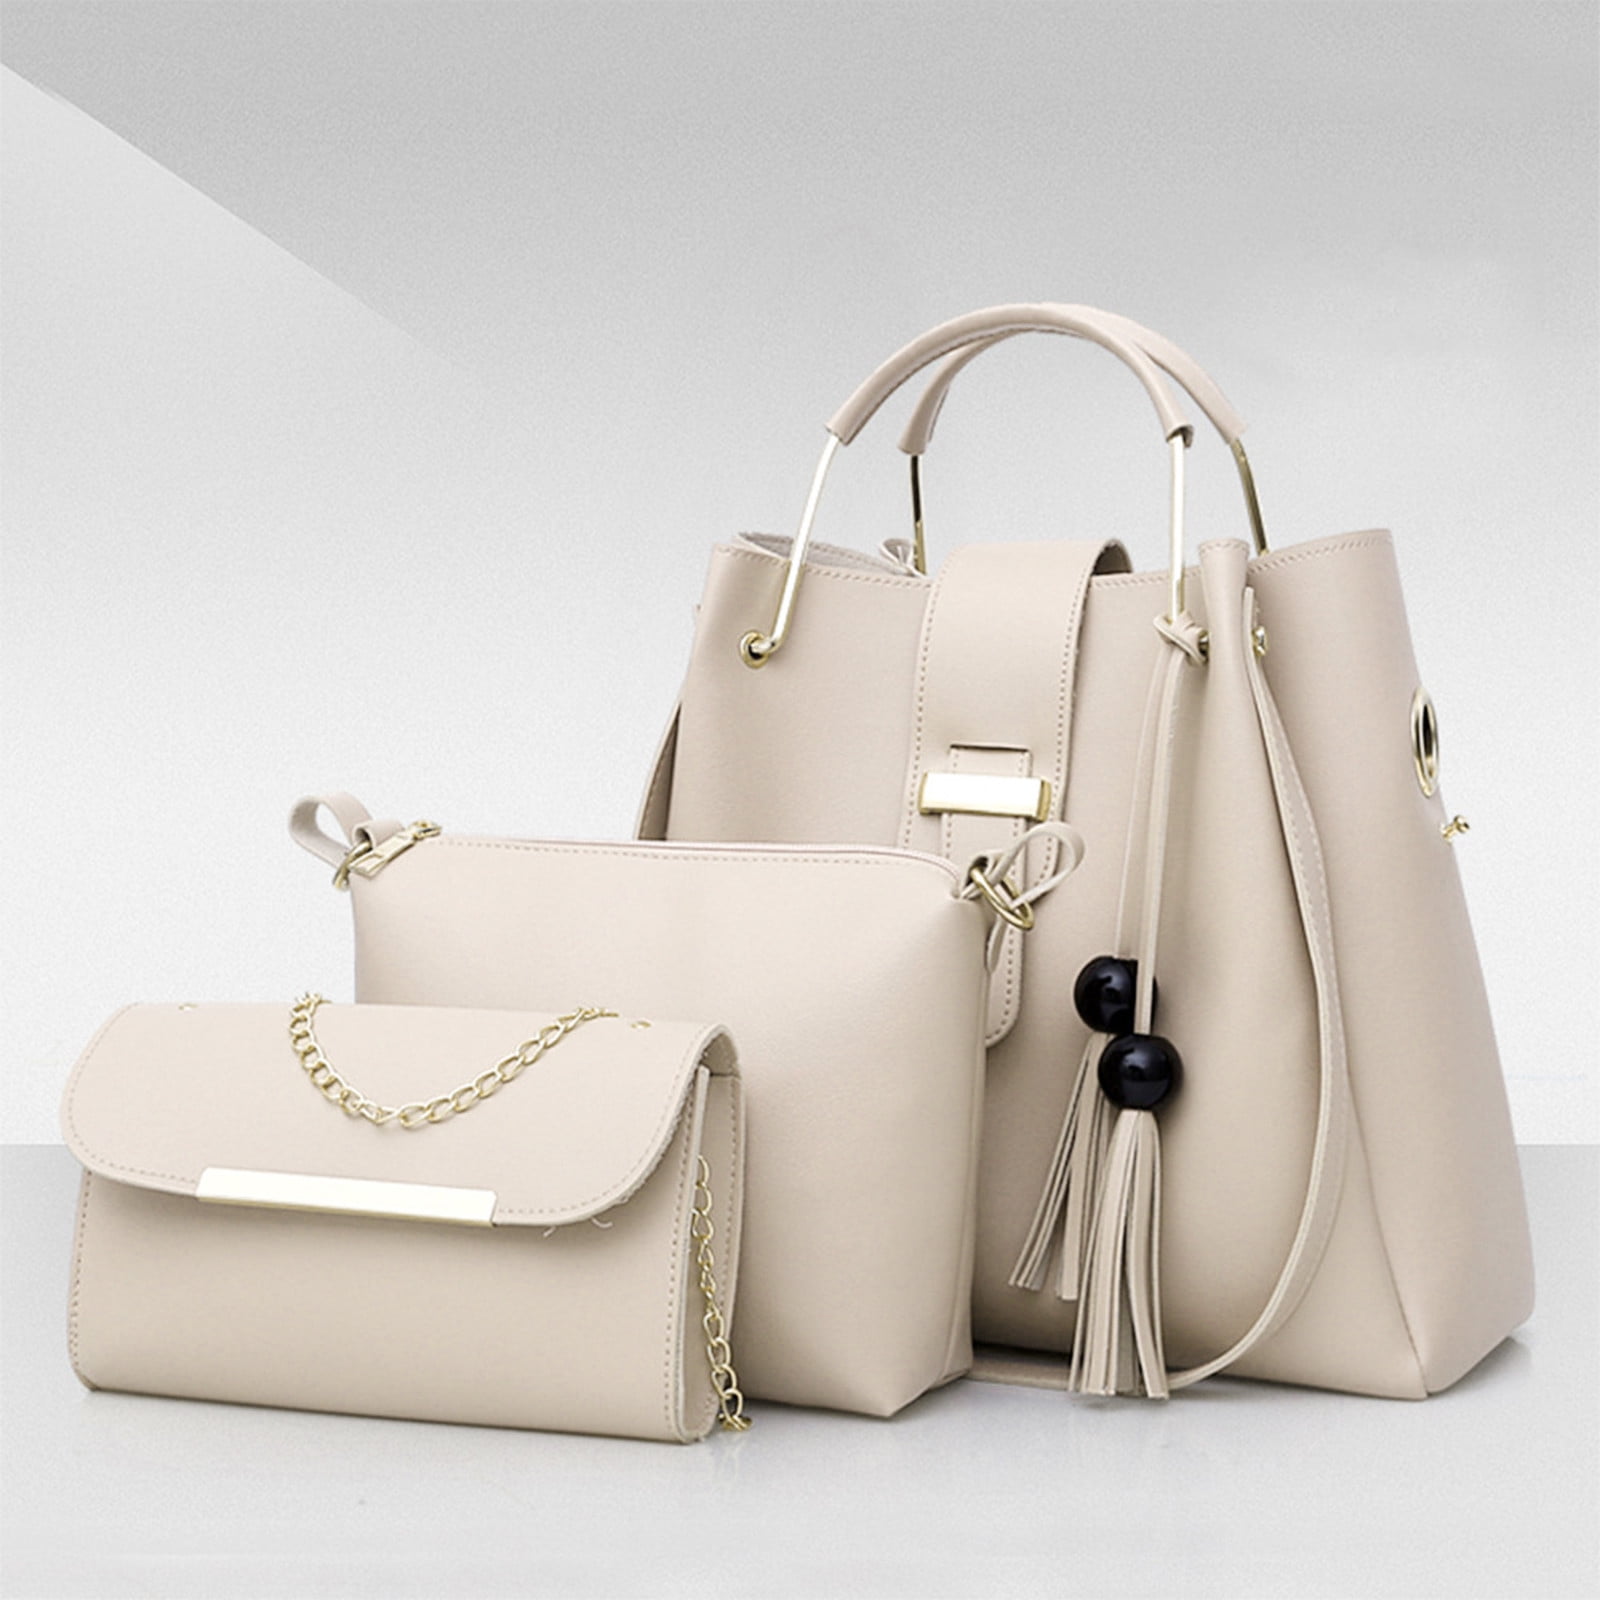 Aldo Handbags On Sale Up To 90% Off Retail